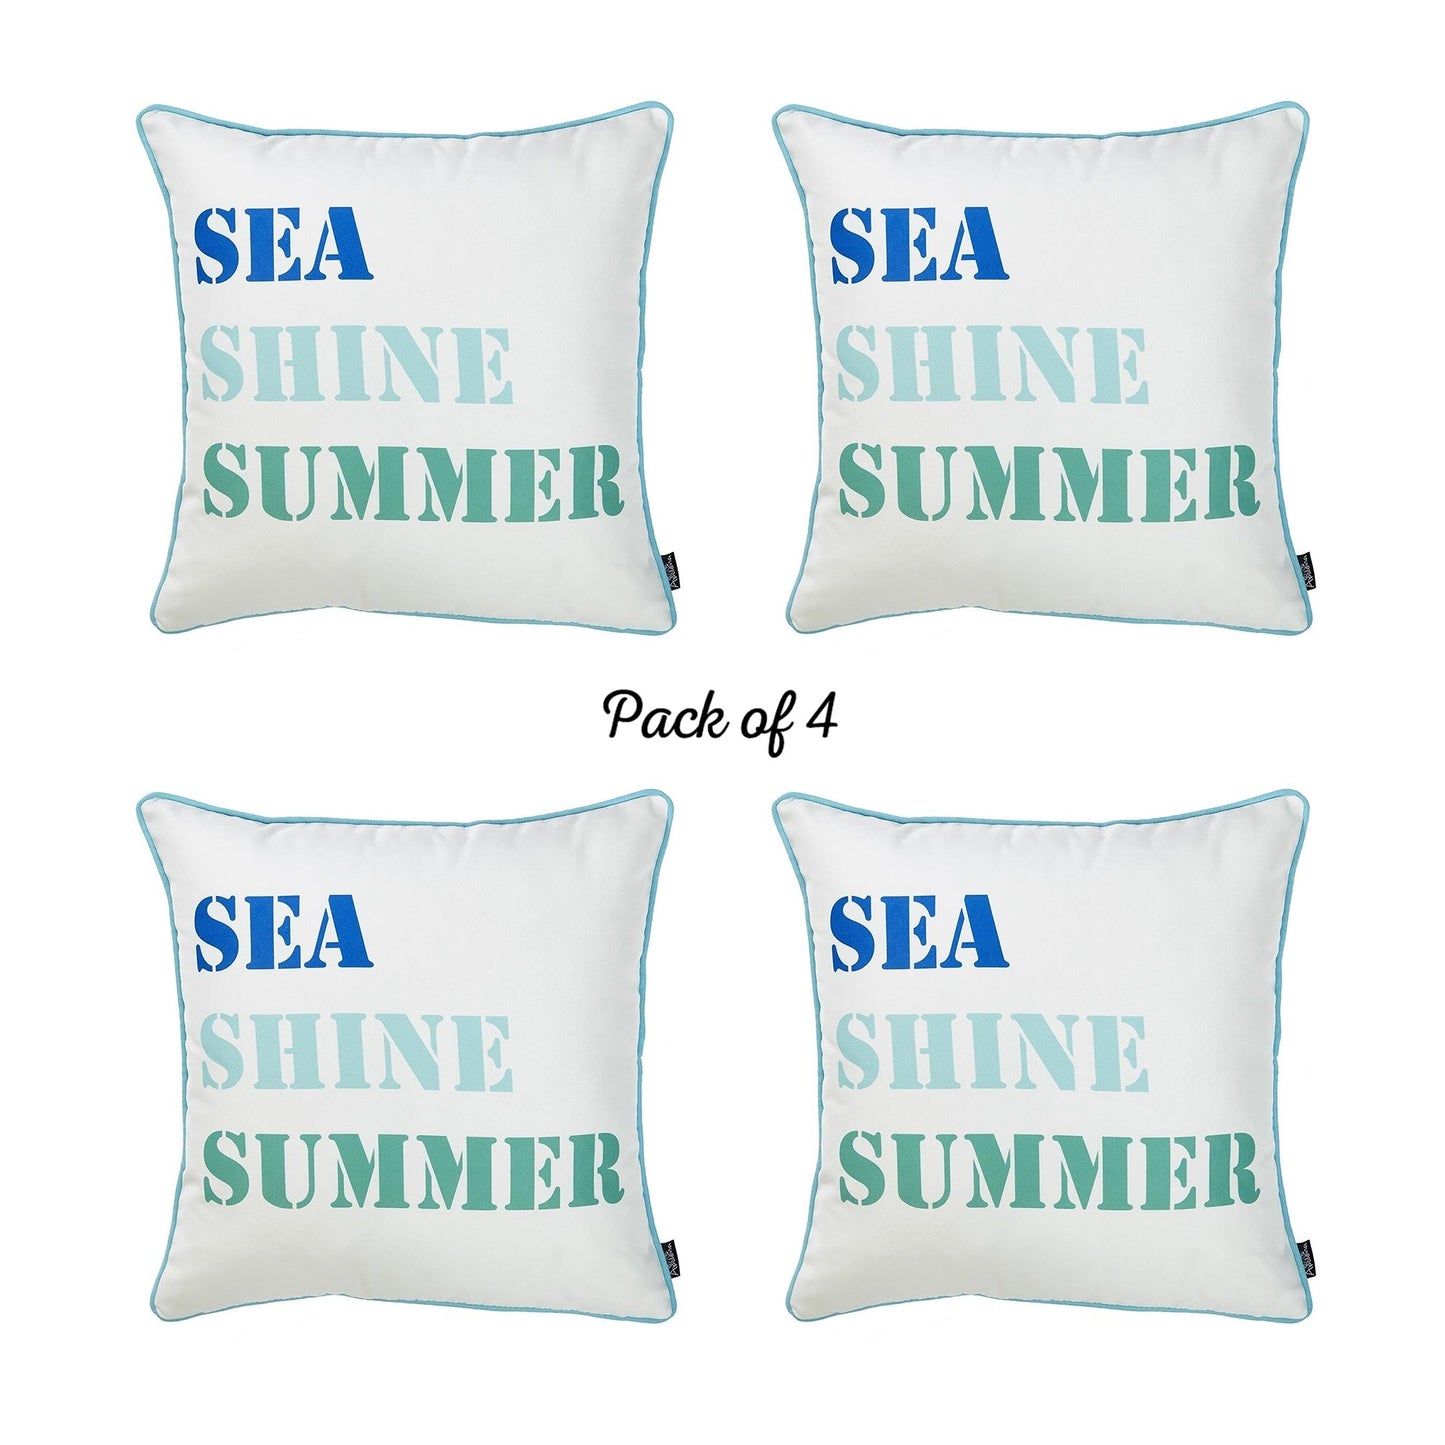 Marine Sea Shine Square 18" Throw Pillow Cover (Set of 4)